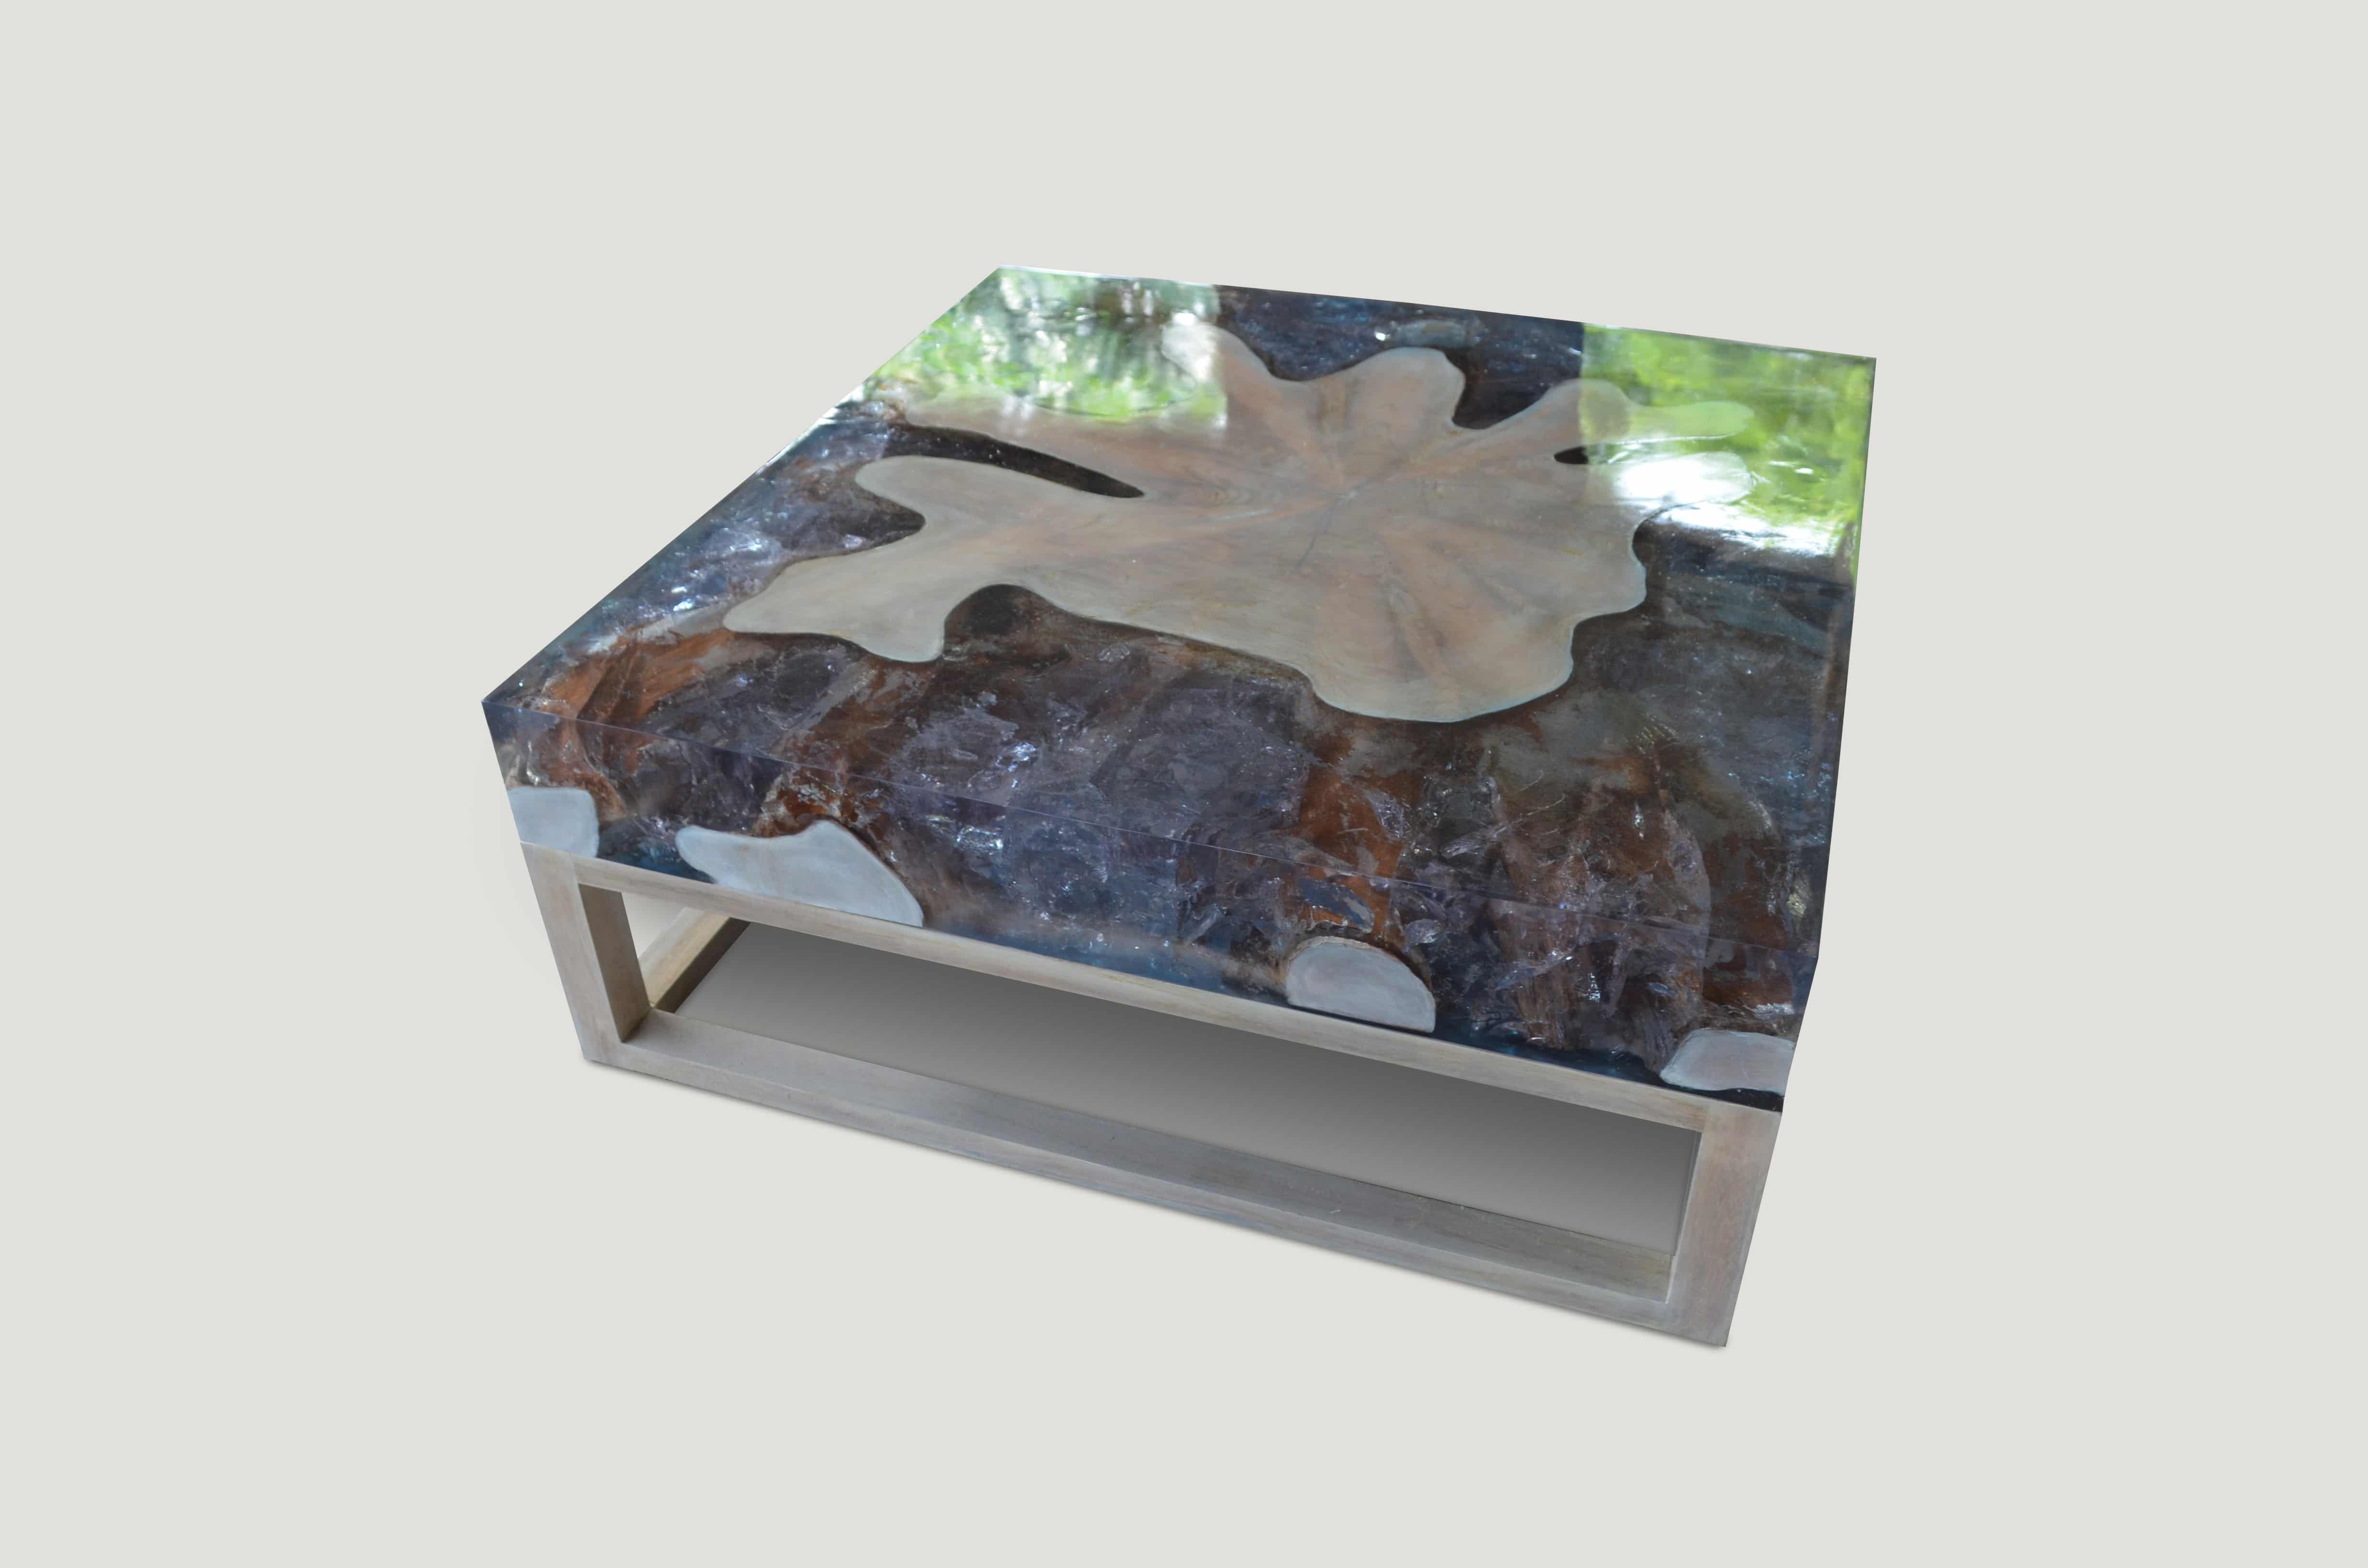 teak wood and resin coffee table